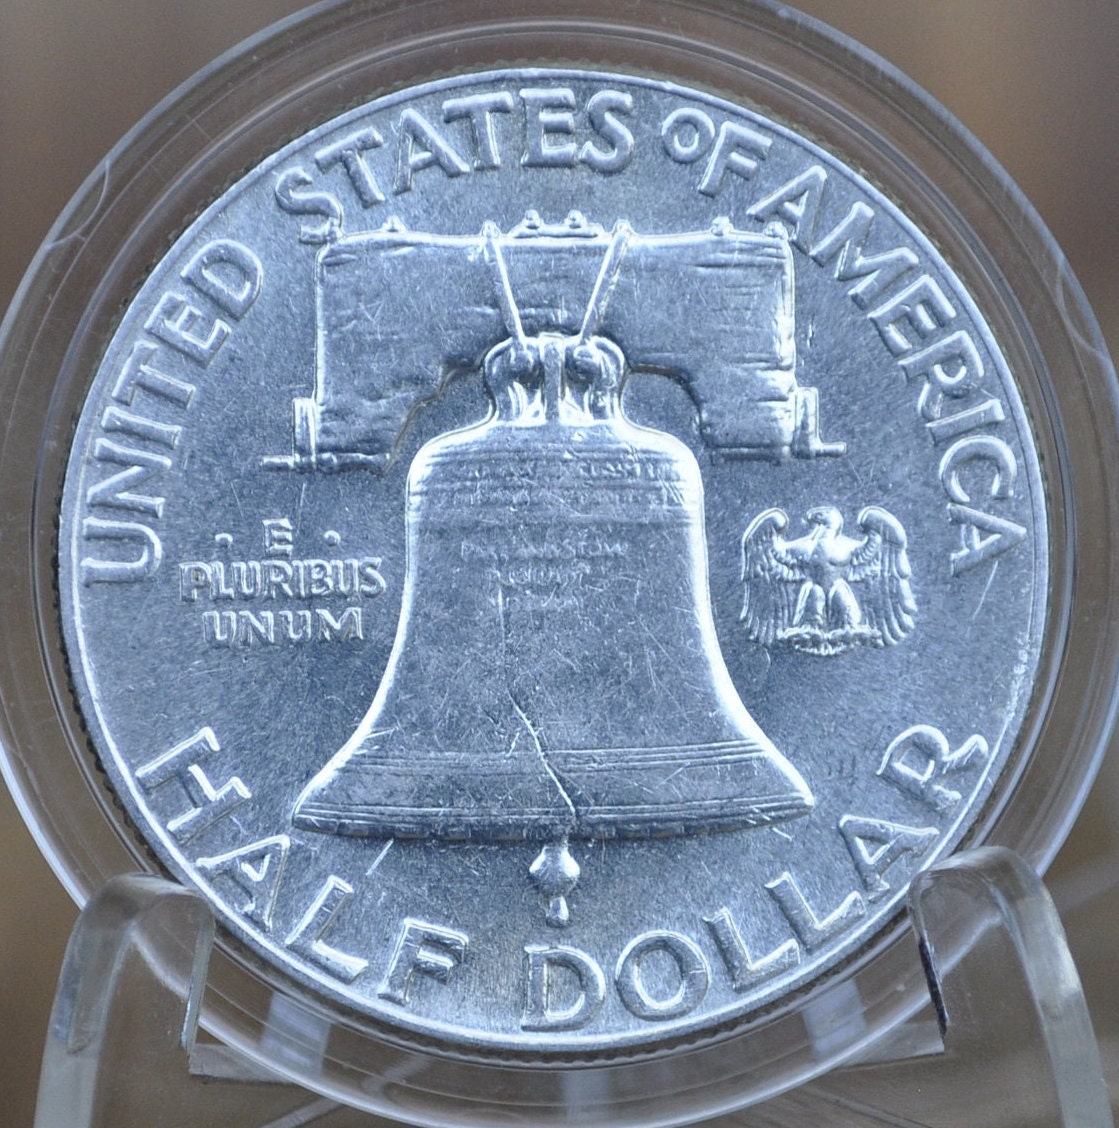 1948 Franklin Half Dollar - BU (Uncirculated) Grade / Condition - Silver Half Dollar - 1948-P Ben Franklin Half Dollar